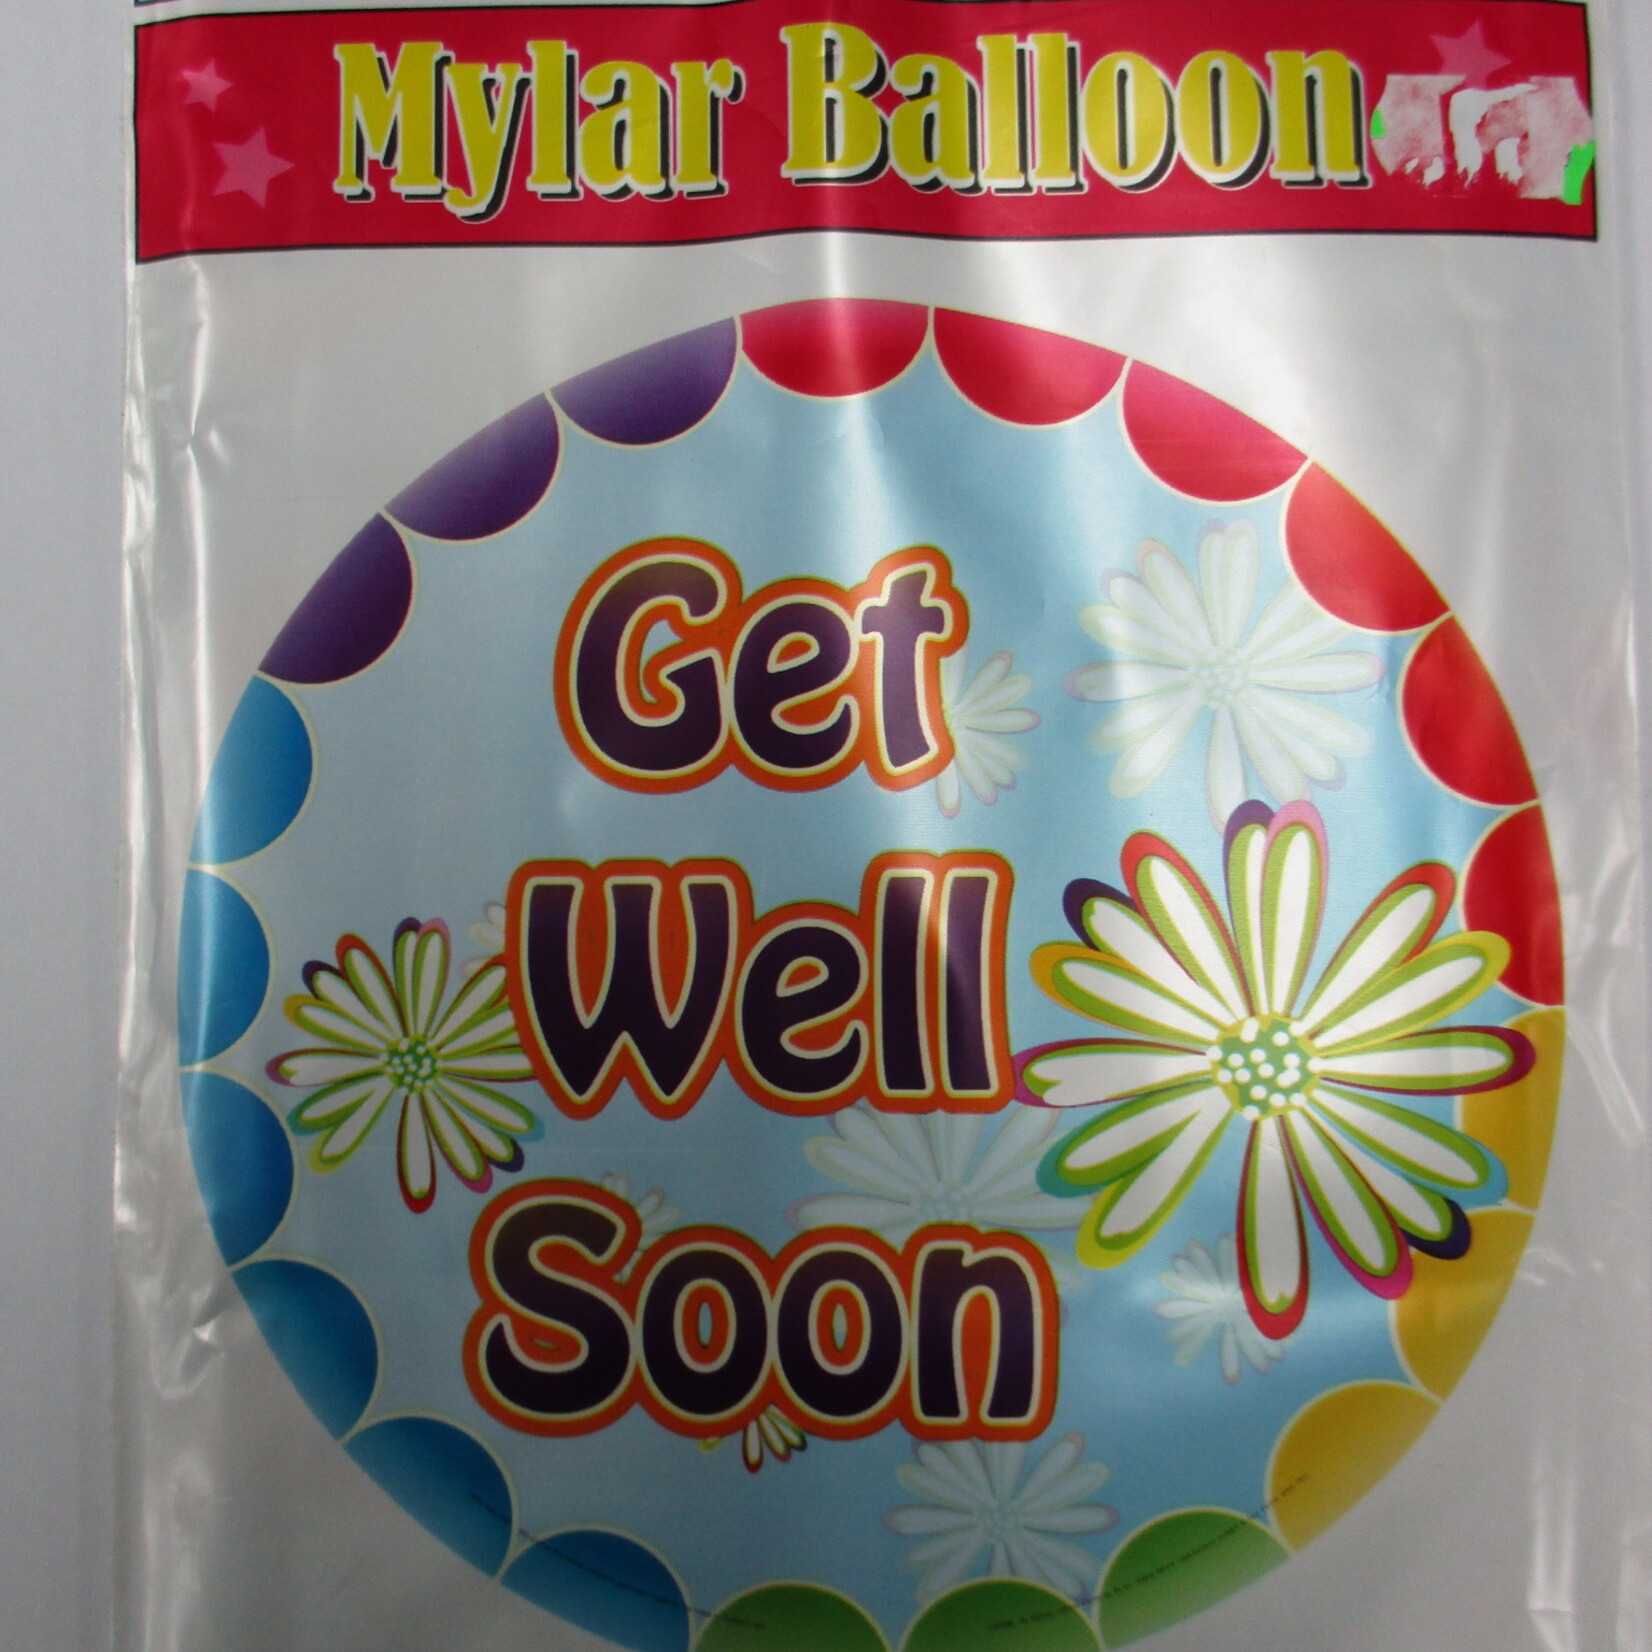 Mylar Balloon 18 Inches Get Well Soon